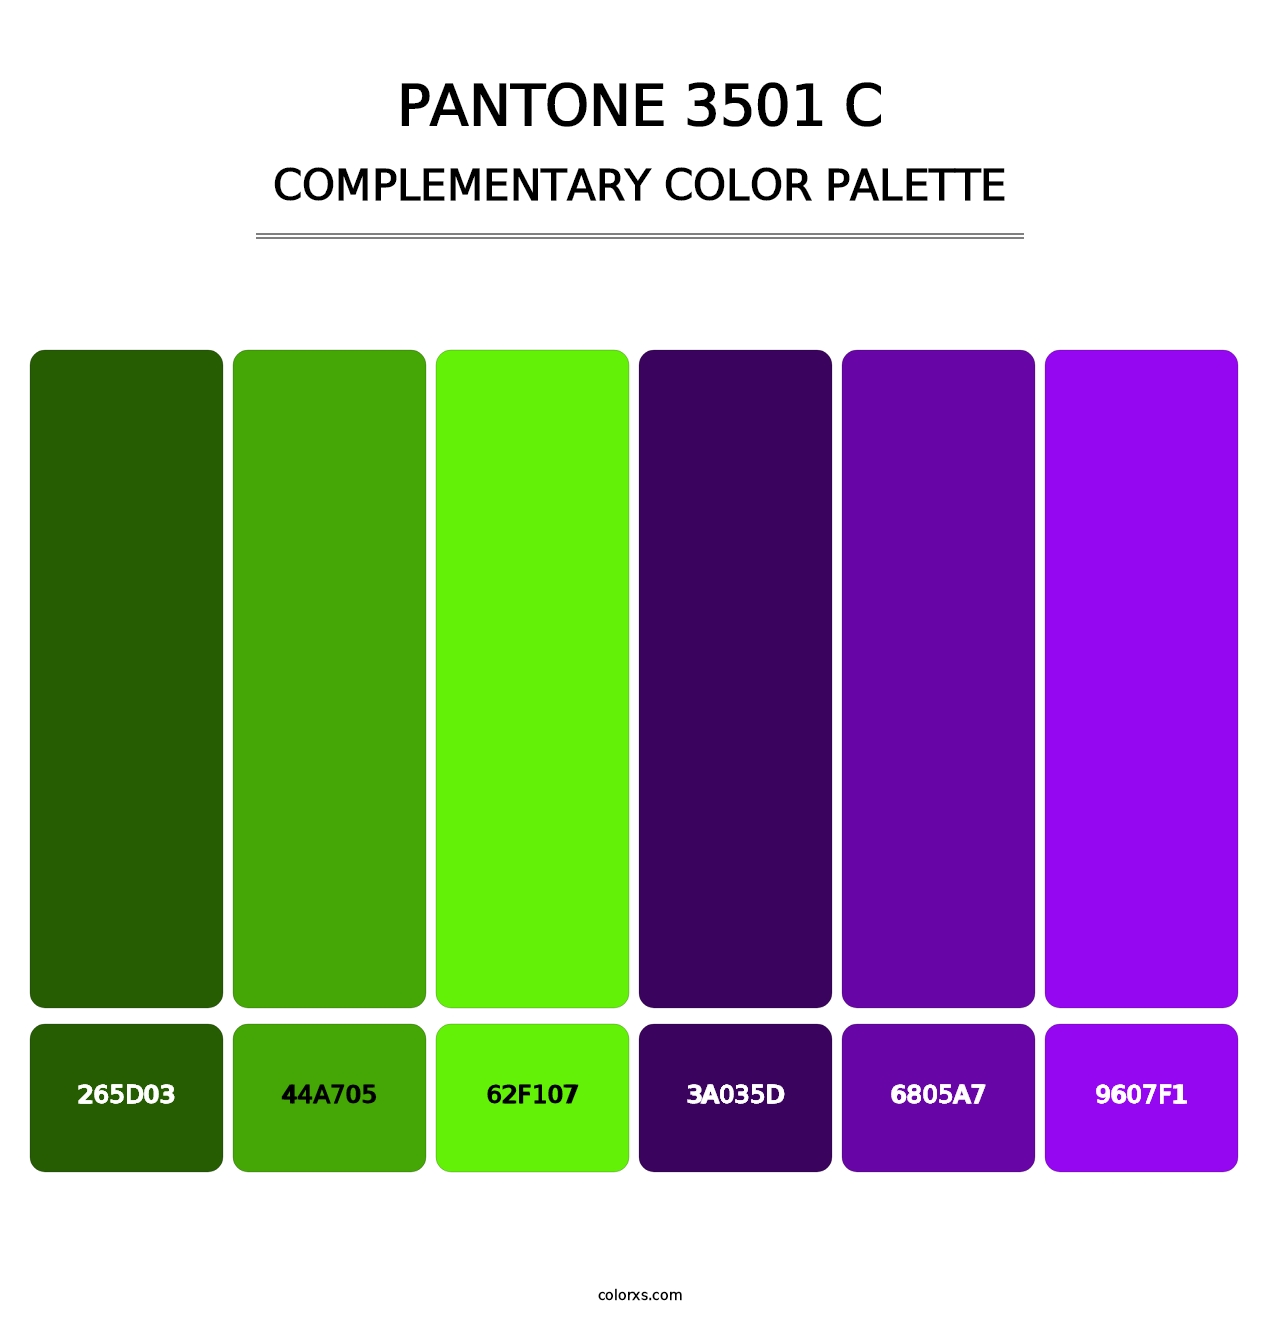 PANTONE 3501 C - Complementary Color Palette